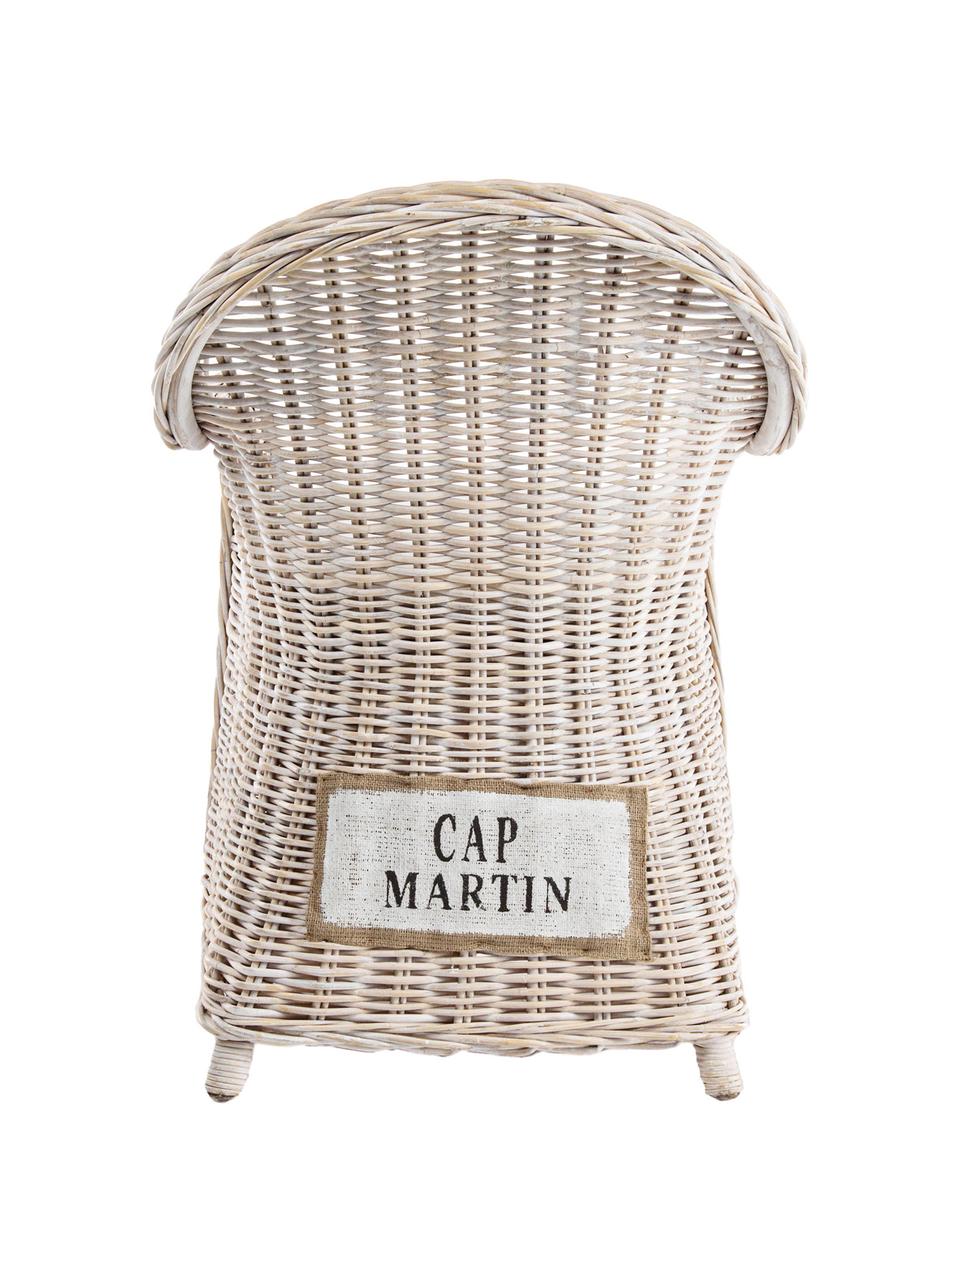 Chaise rotin avec coussin d'assise Martin, Rotin, blanc, larg. 60 x prof. 67 cm